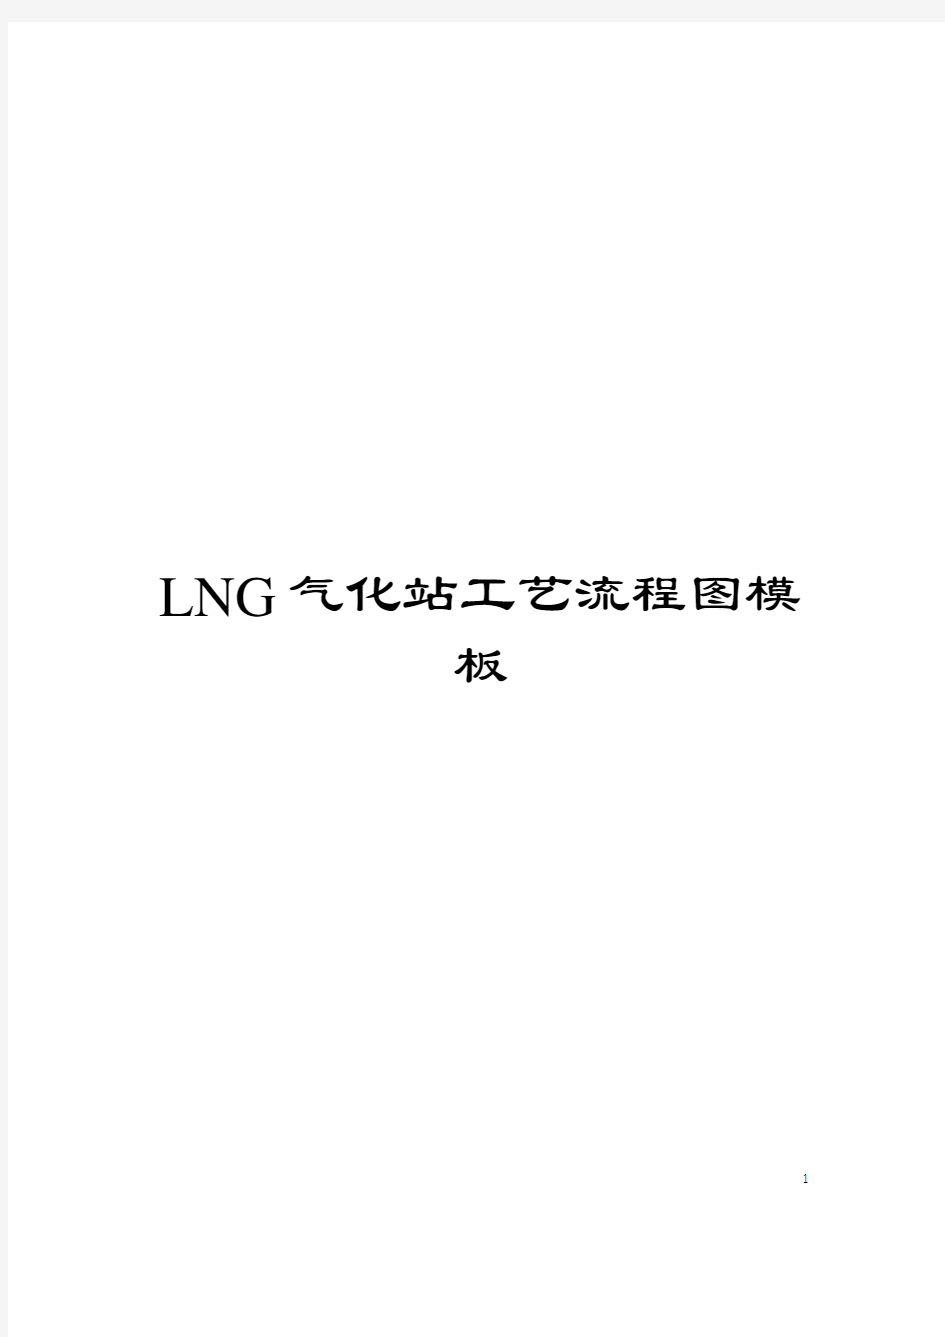 LNG气化站工艺流程图模板